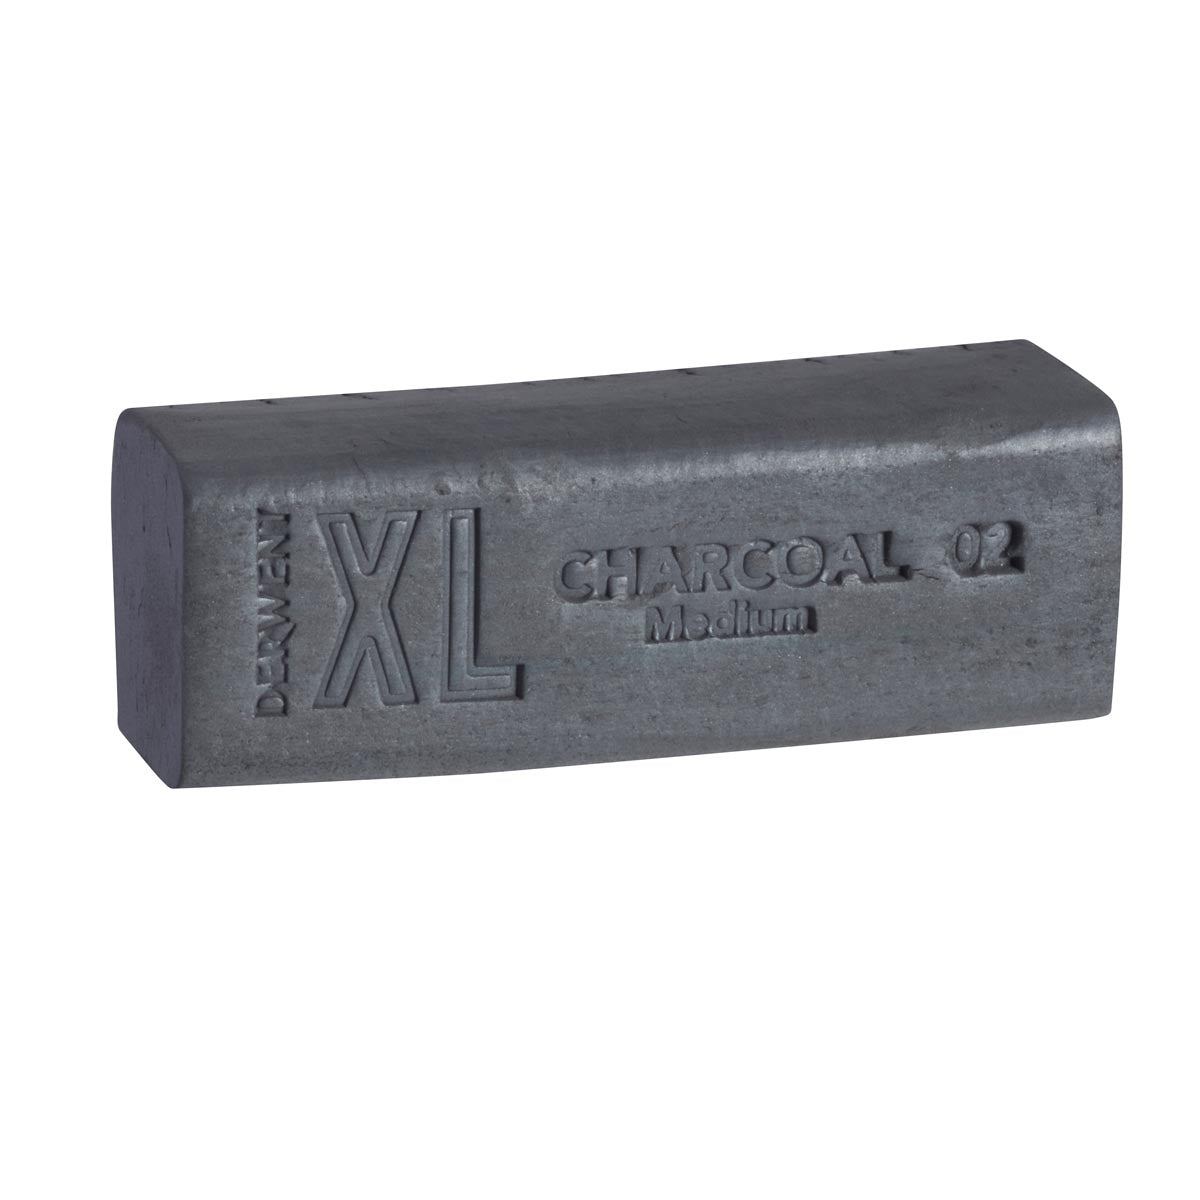 Derwent - Charcoal XL Blocks - Medium